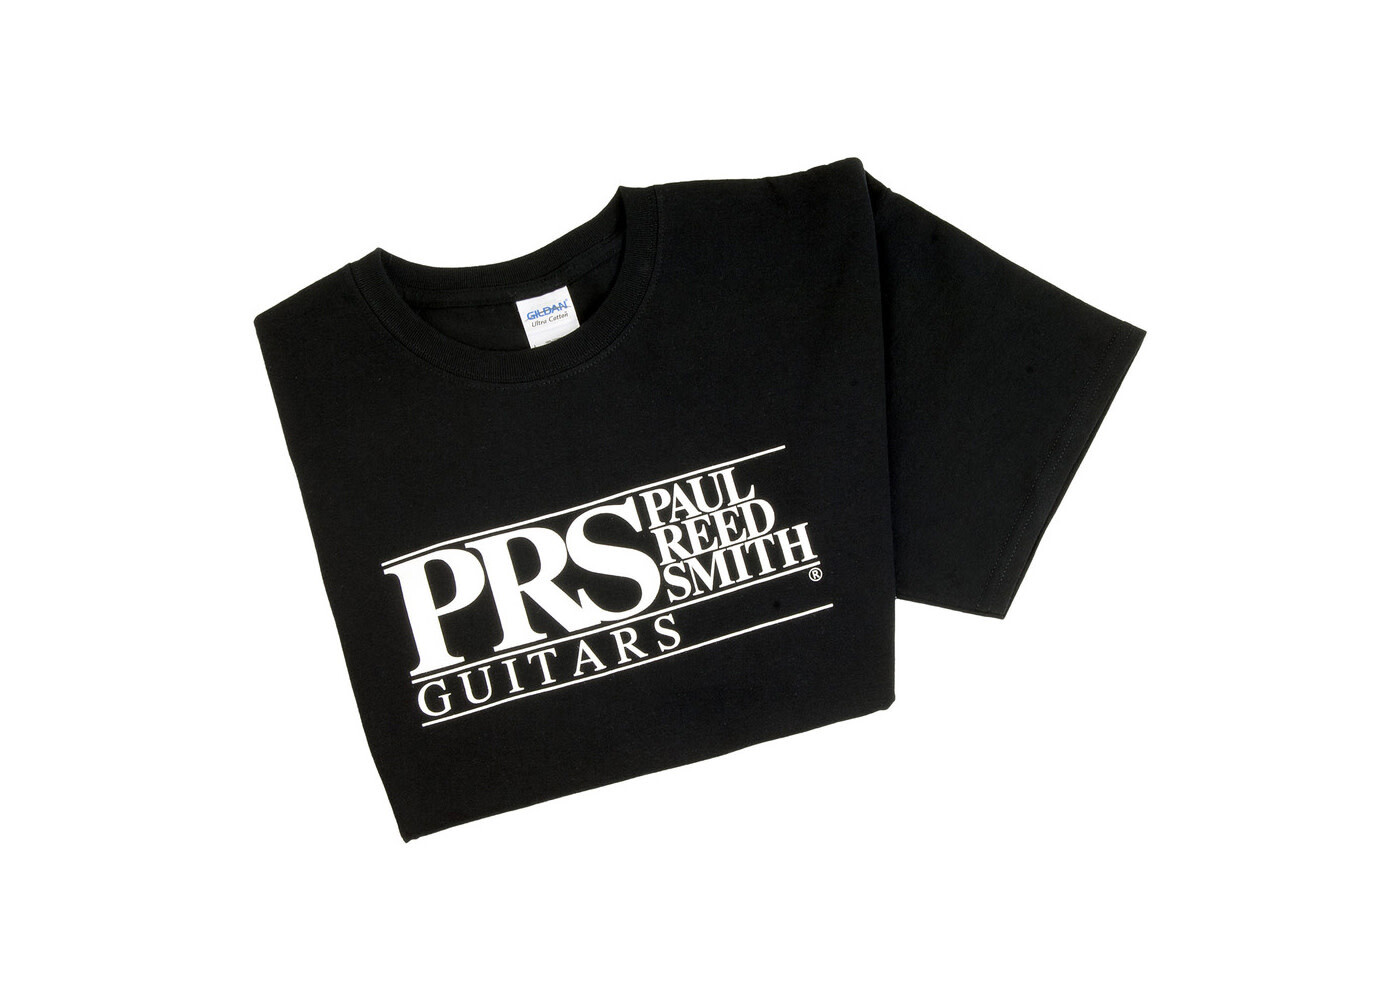 PRS Guitars PRS Tee, Short-Slv, PRS Block Logo, Black, Small